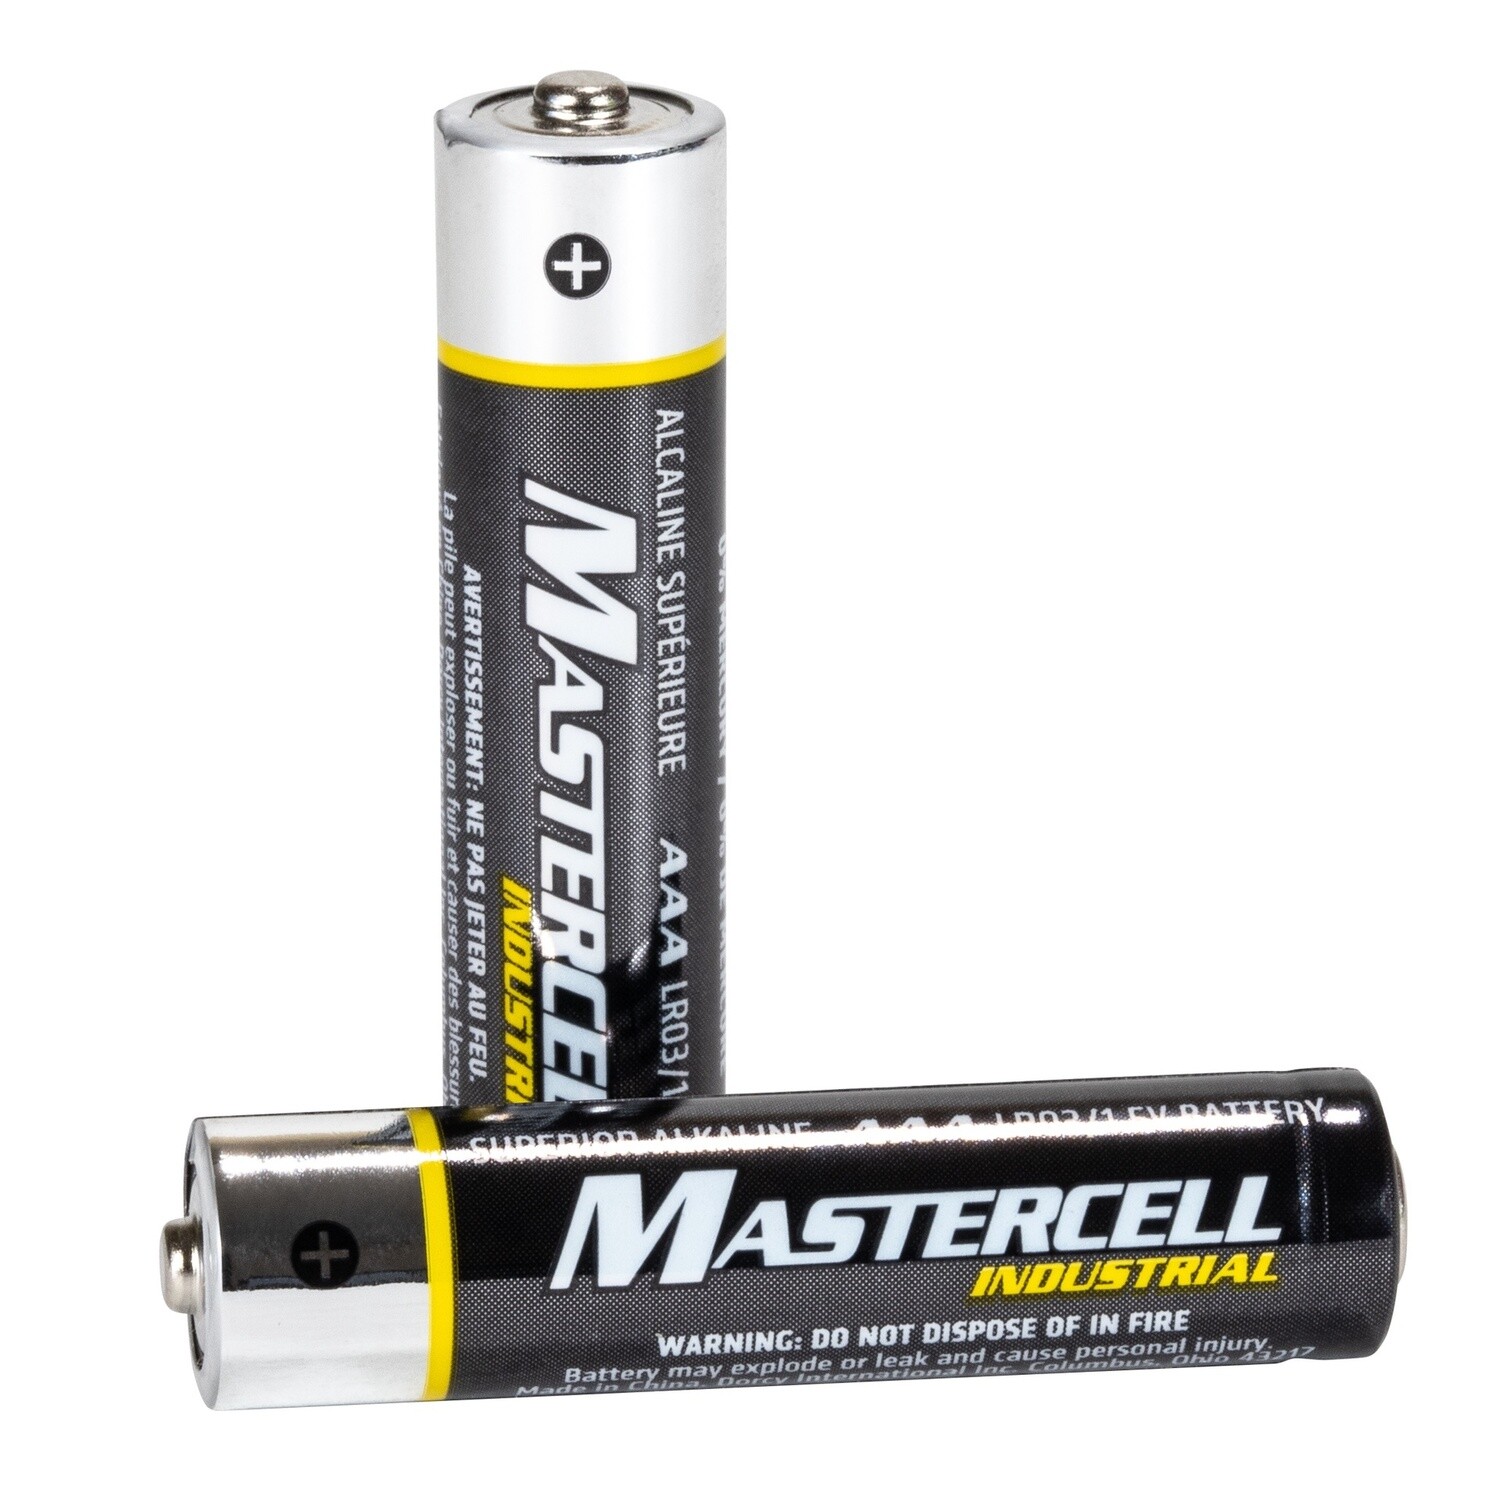 Mastercell Industrial AAA Alkaline Batteries 24 Pack